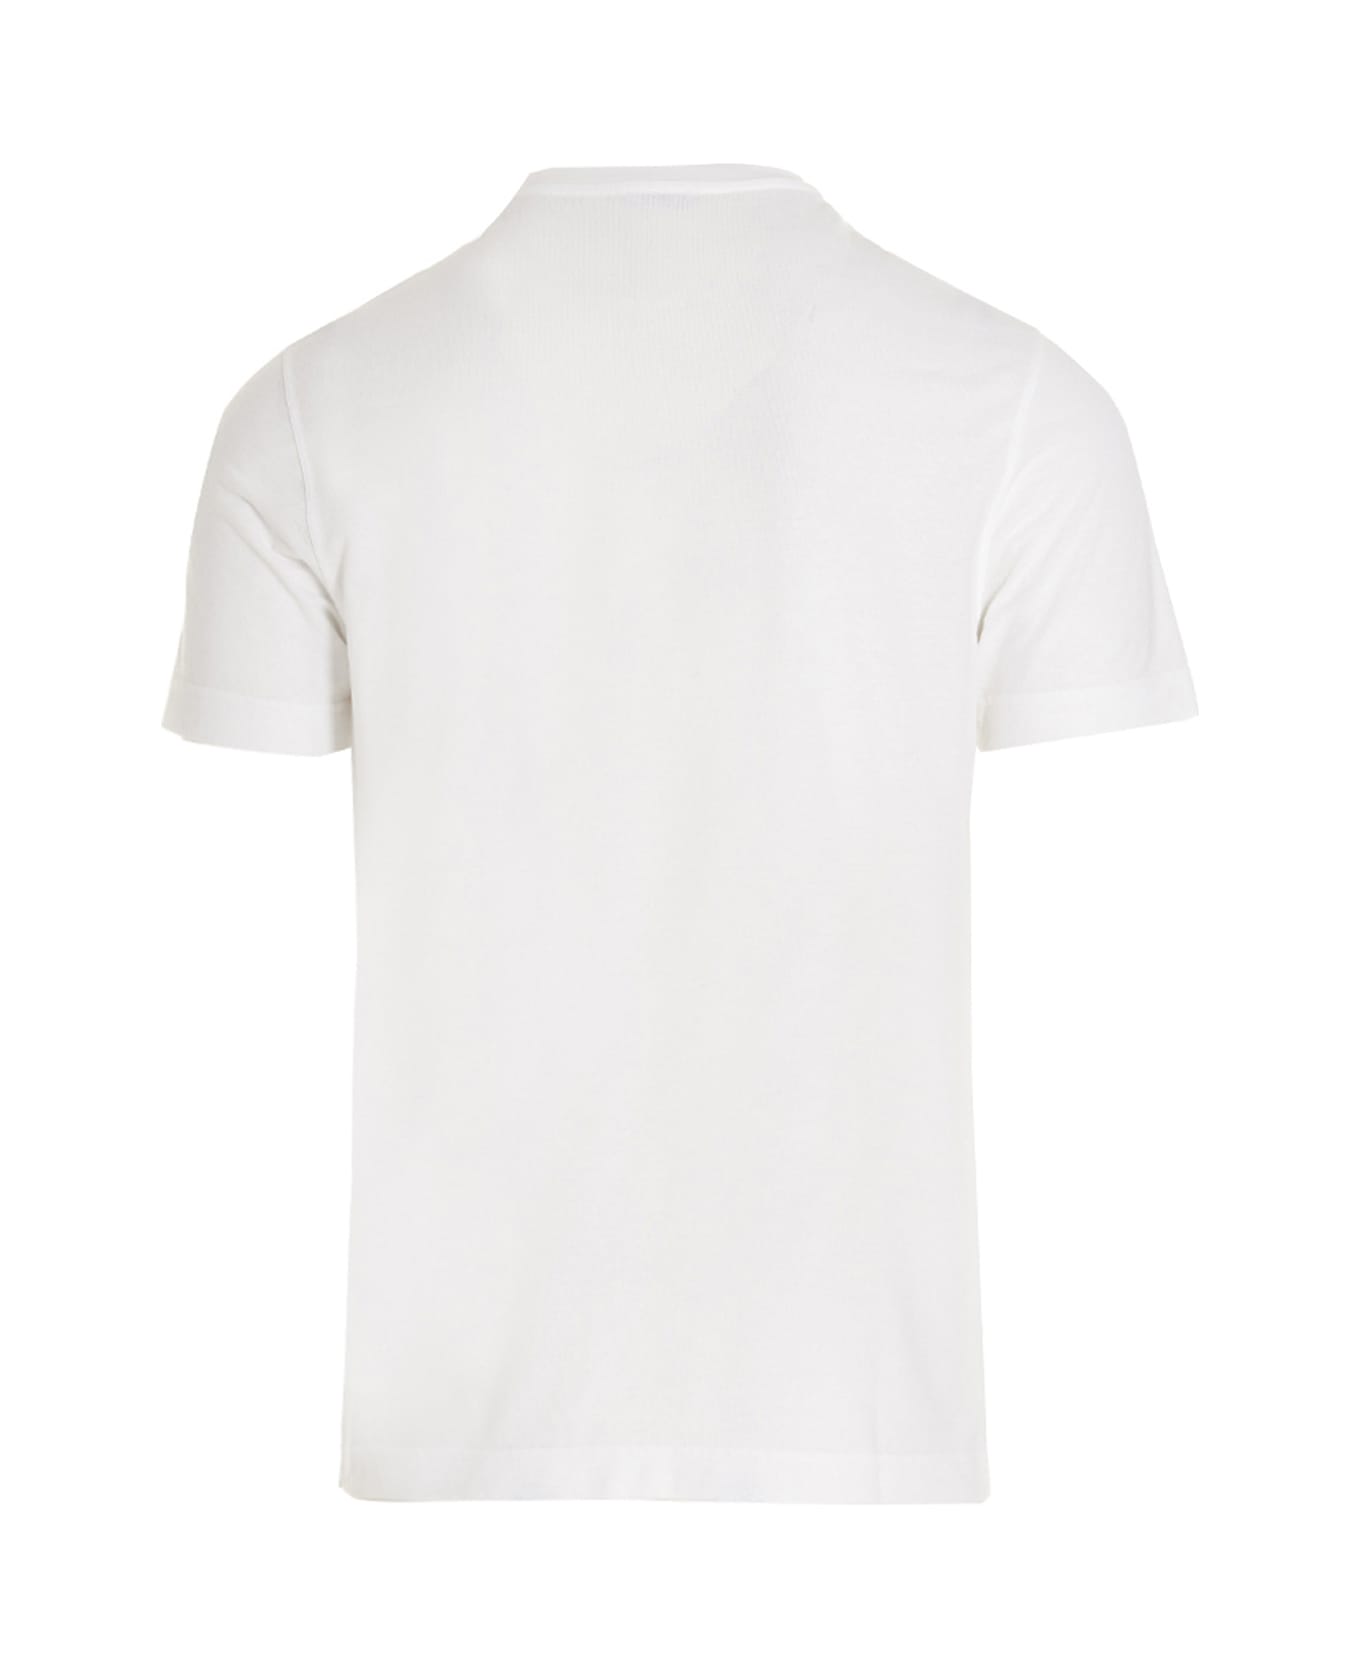 Zanone Ice Cotton T-shirt シャツ